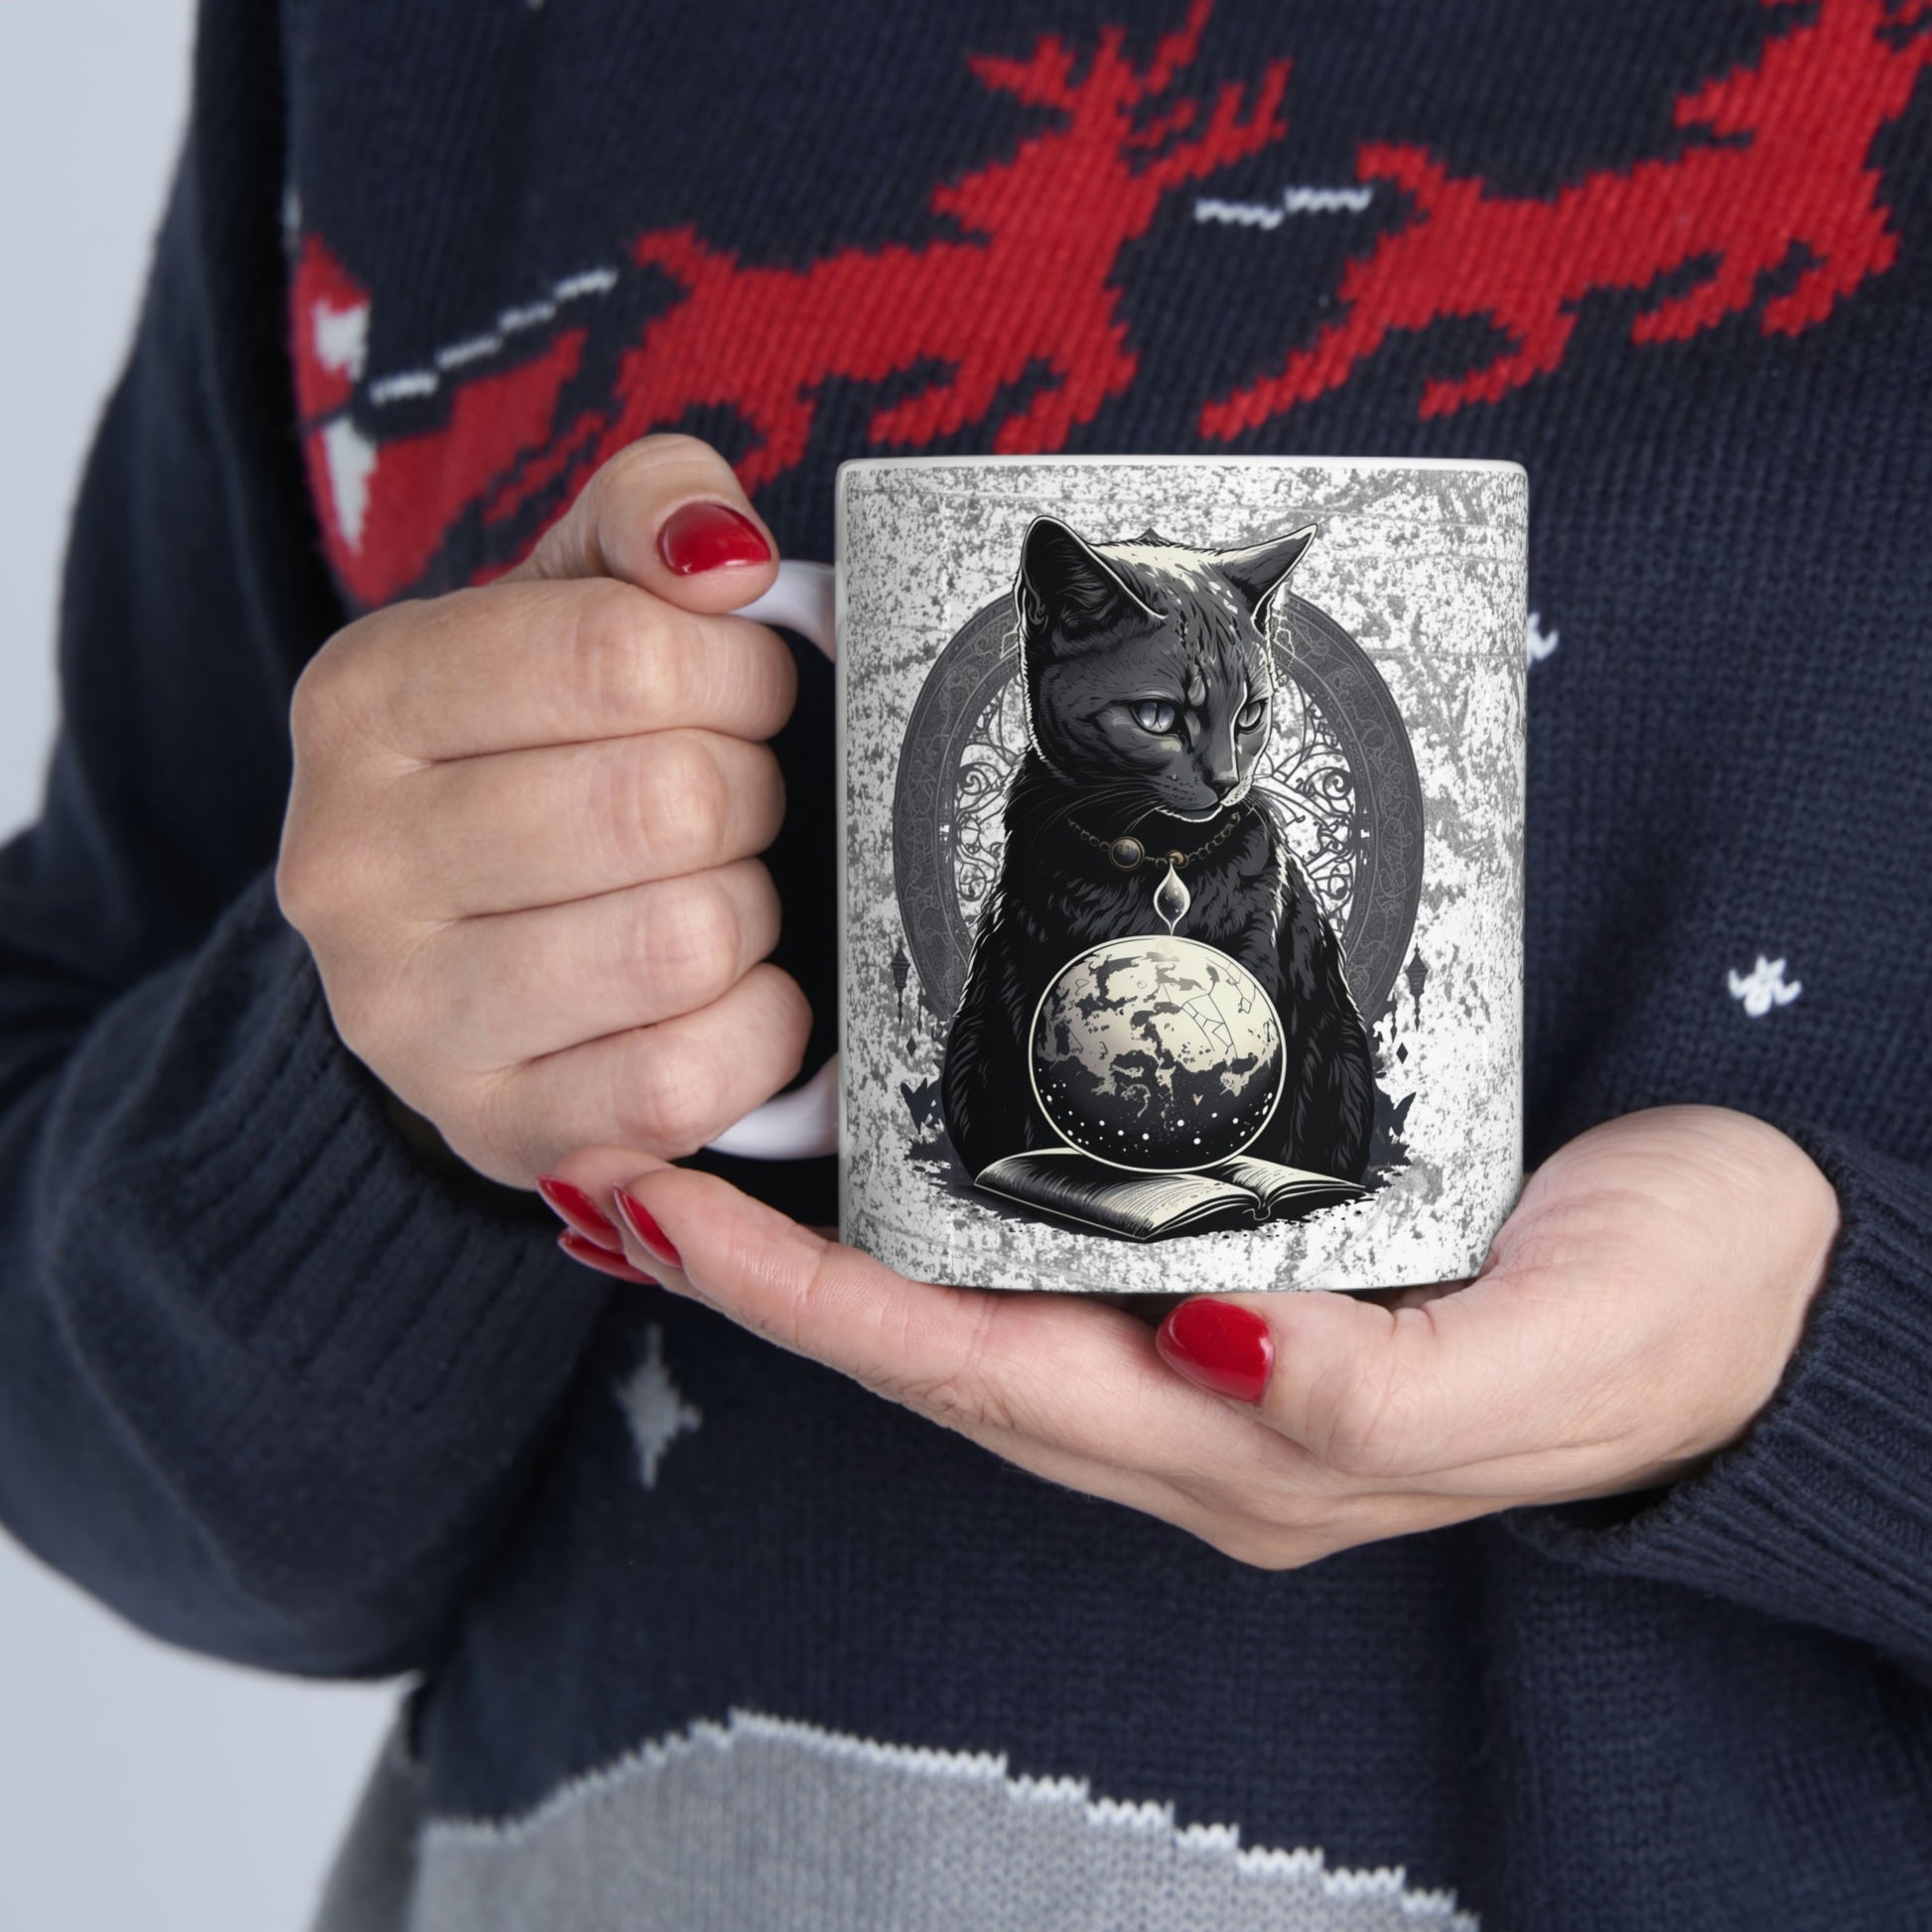 Cosmic Cat Ceramic Mug 11oz, cat magician coffee mug, witchy gothic cat tea cup, whimsical mug, witchcraft celestial cat mug, fantasy mug